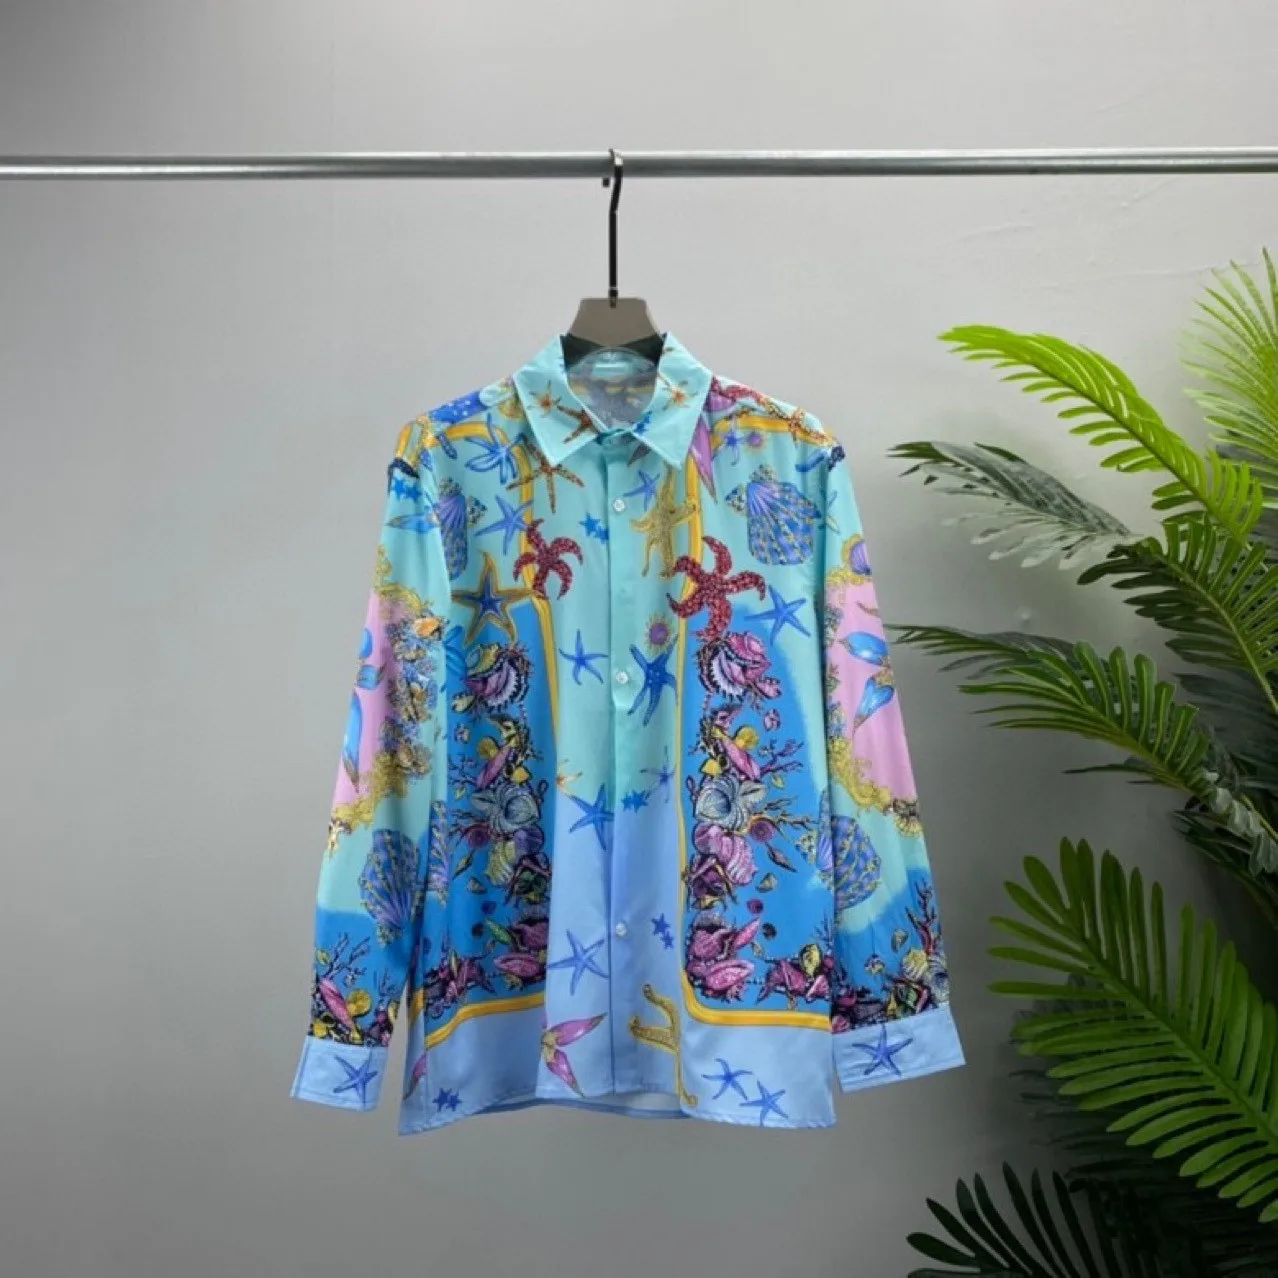 Spring Autumn Hot Chic Men High Quality Print Long Sleeves Casual Shirt Tops B918